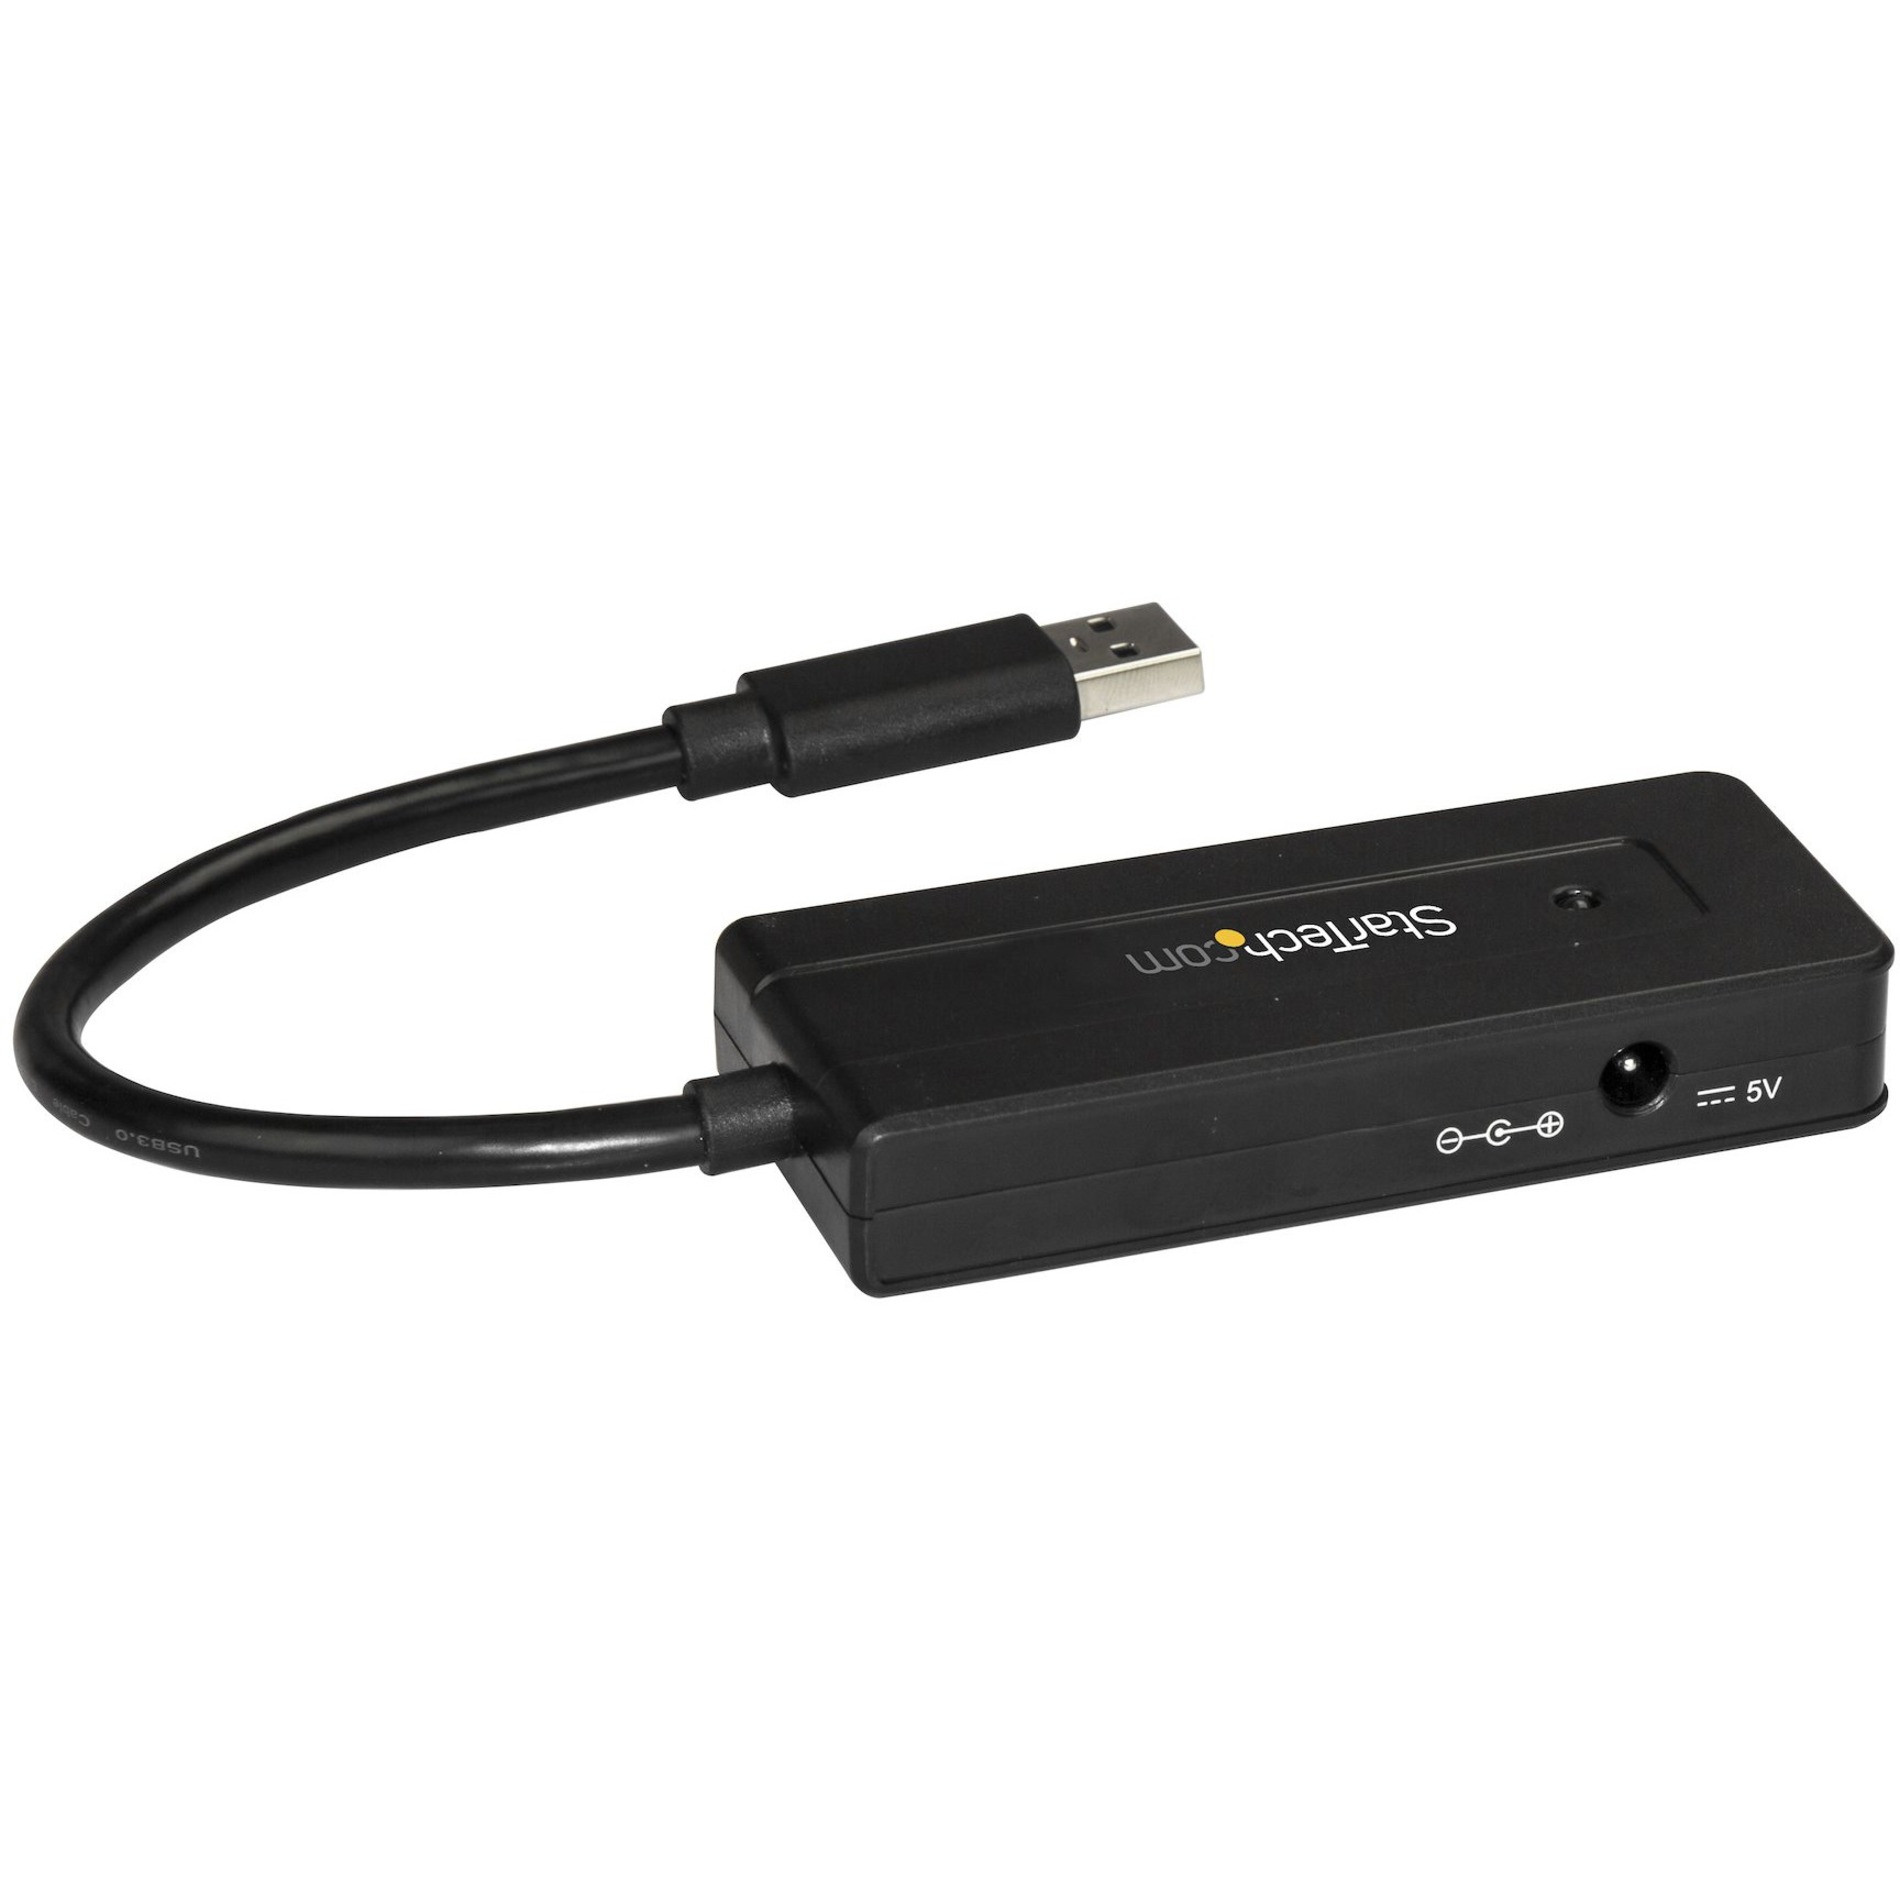 StarTech.com 4 Port USB 2.0 Hub w/Cable - Multi Port Mini Hub - Bus Powered